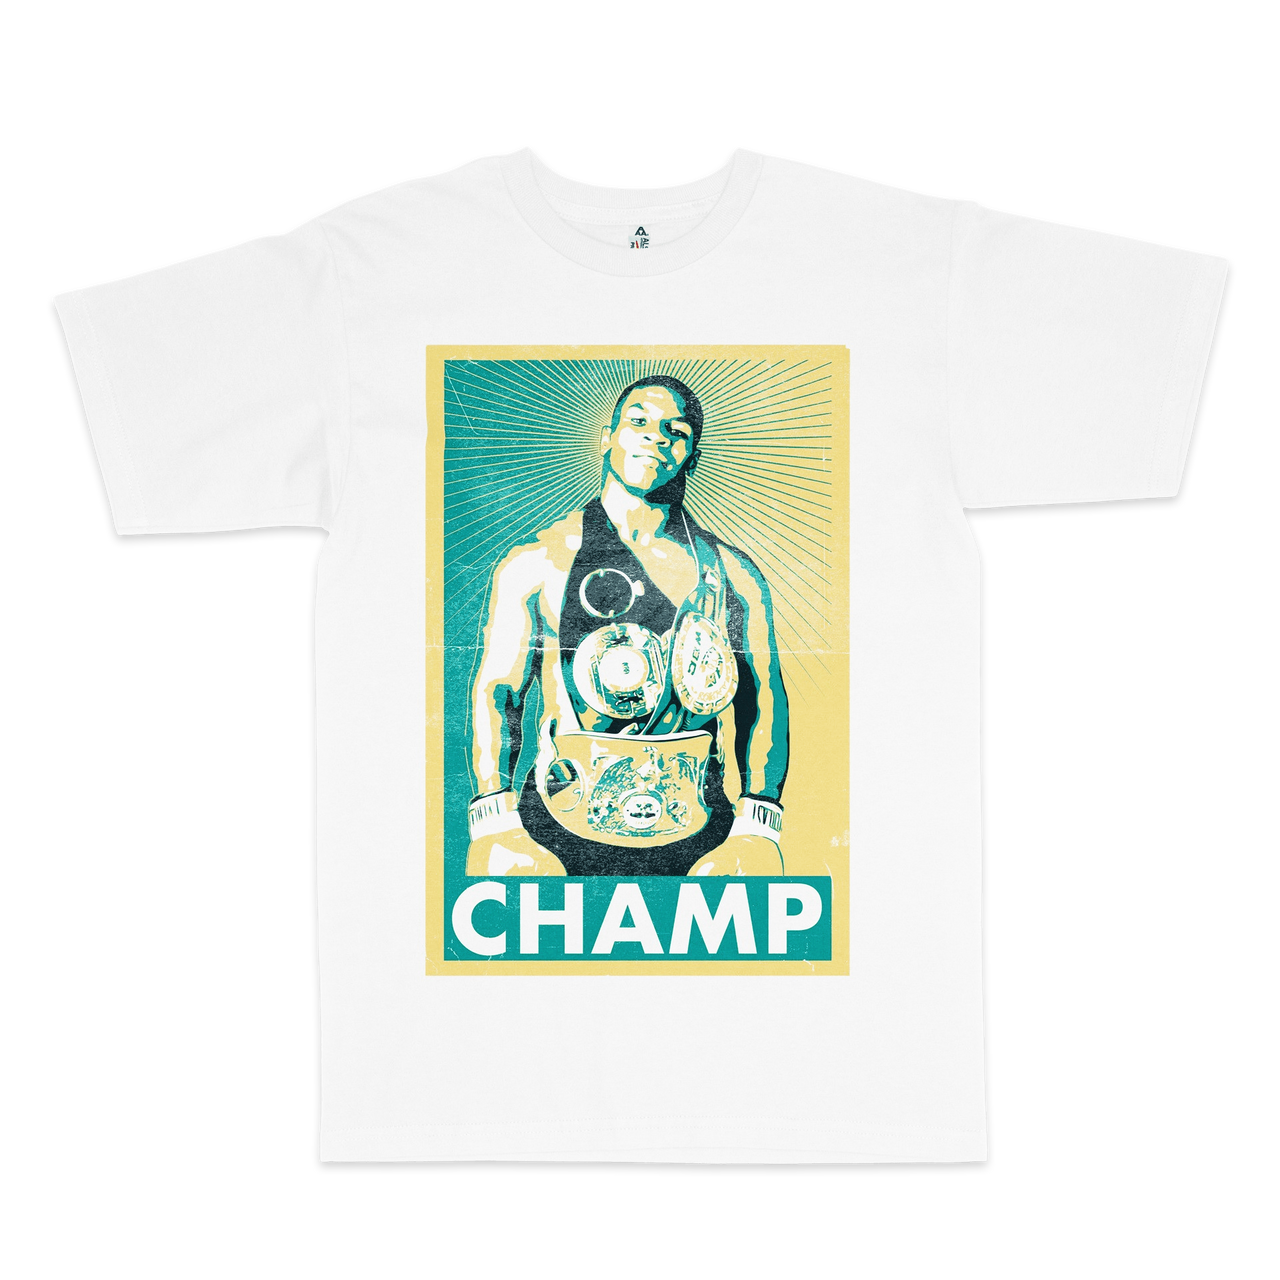 Tyson Champ